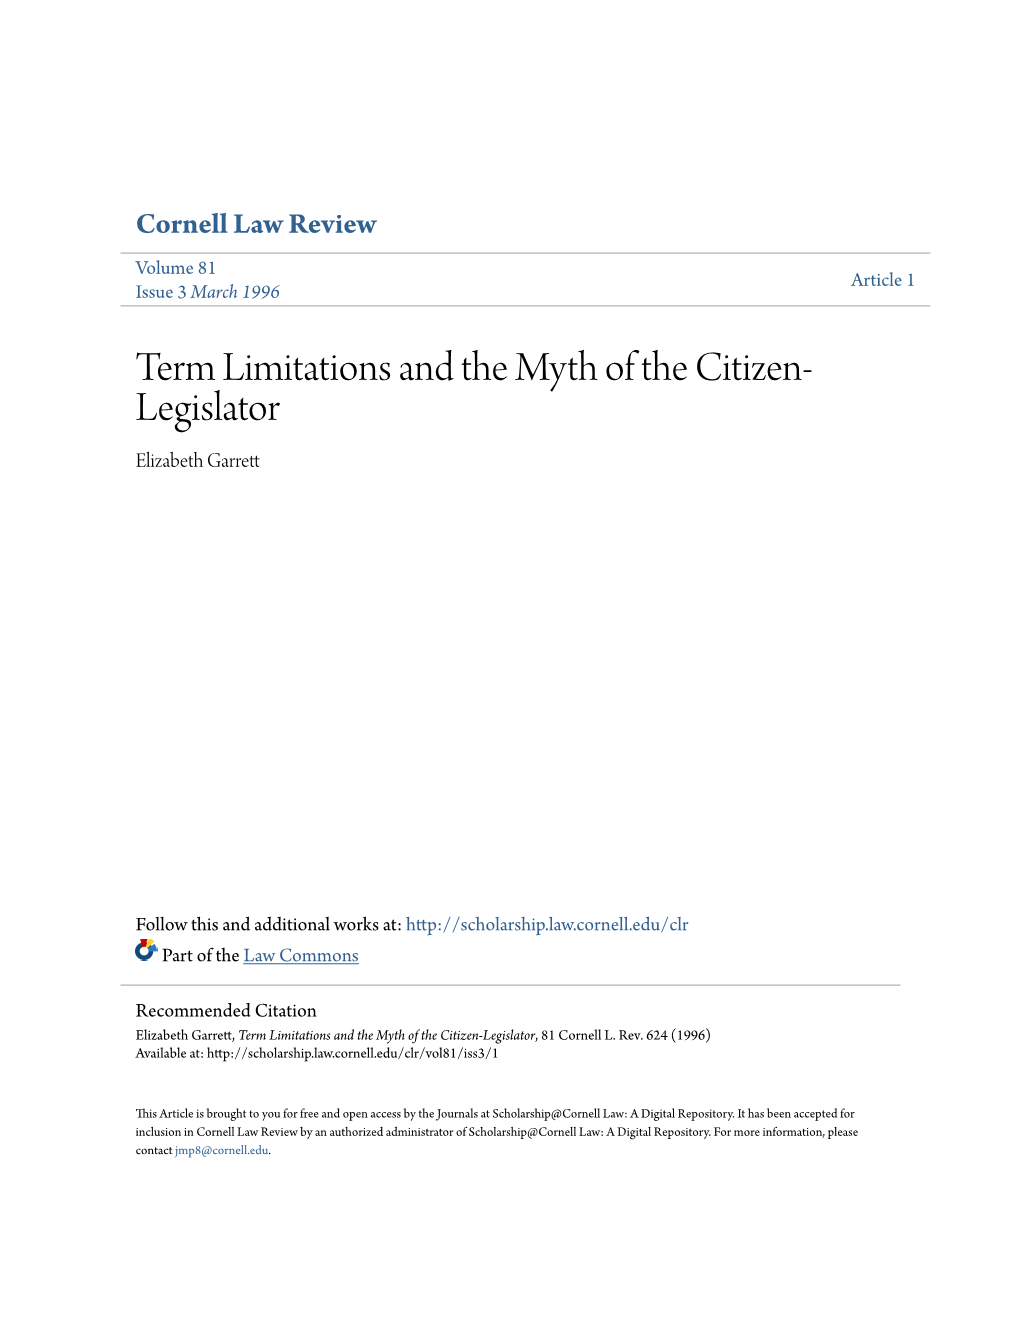 Term Limitations and the Myth of the Citizen-Legislator, 81 Cornell L